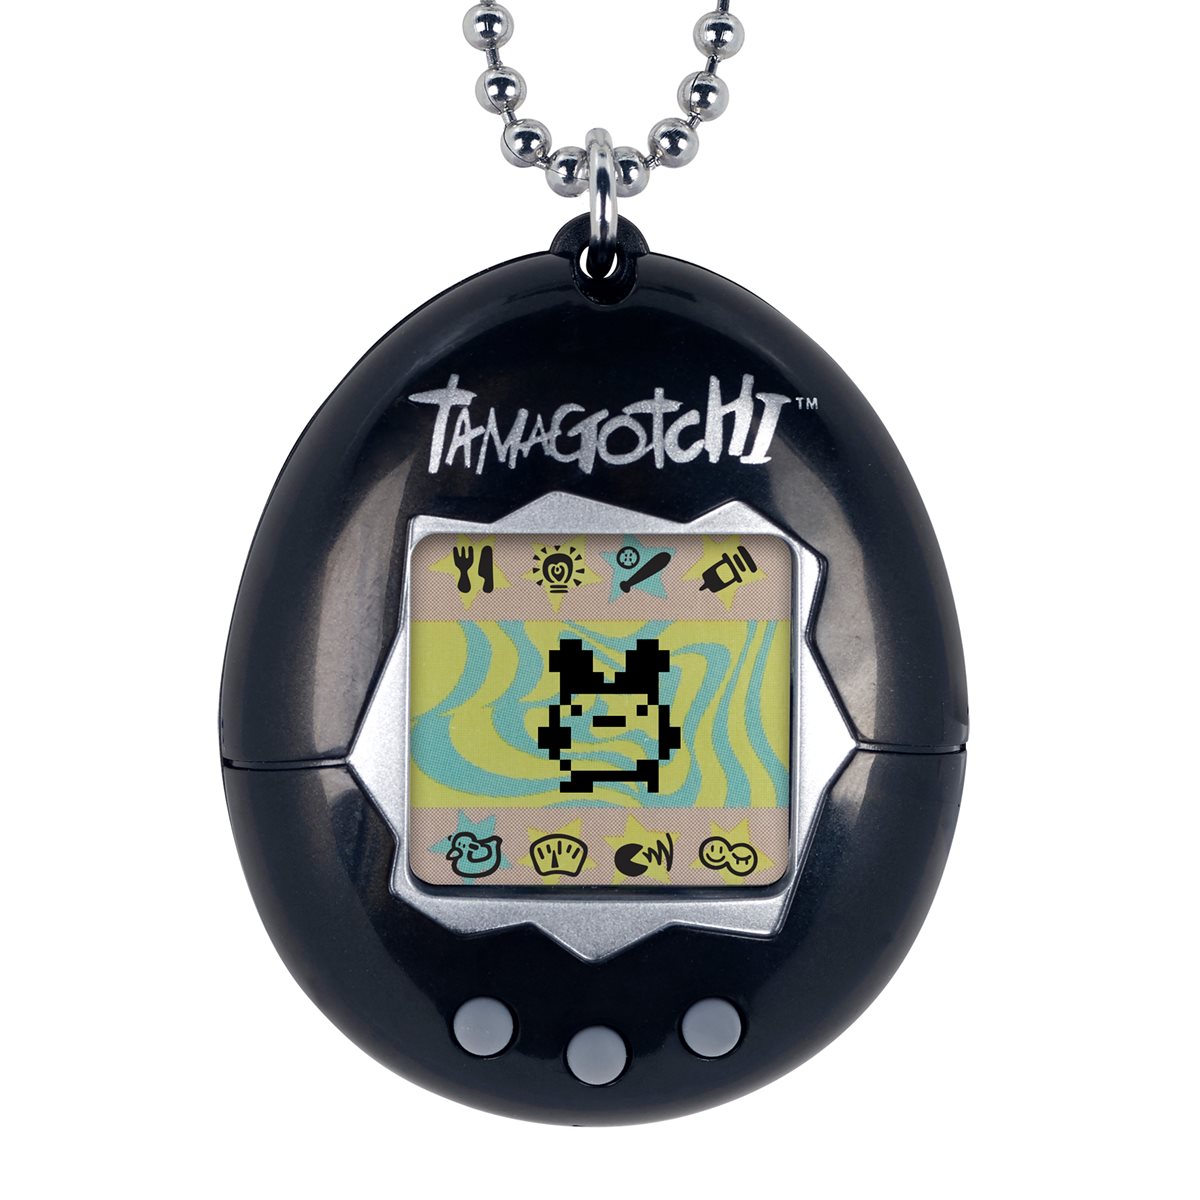 Tamagotchi Electronic Game Black